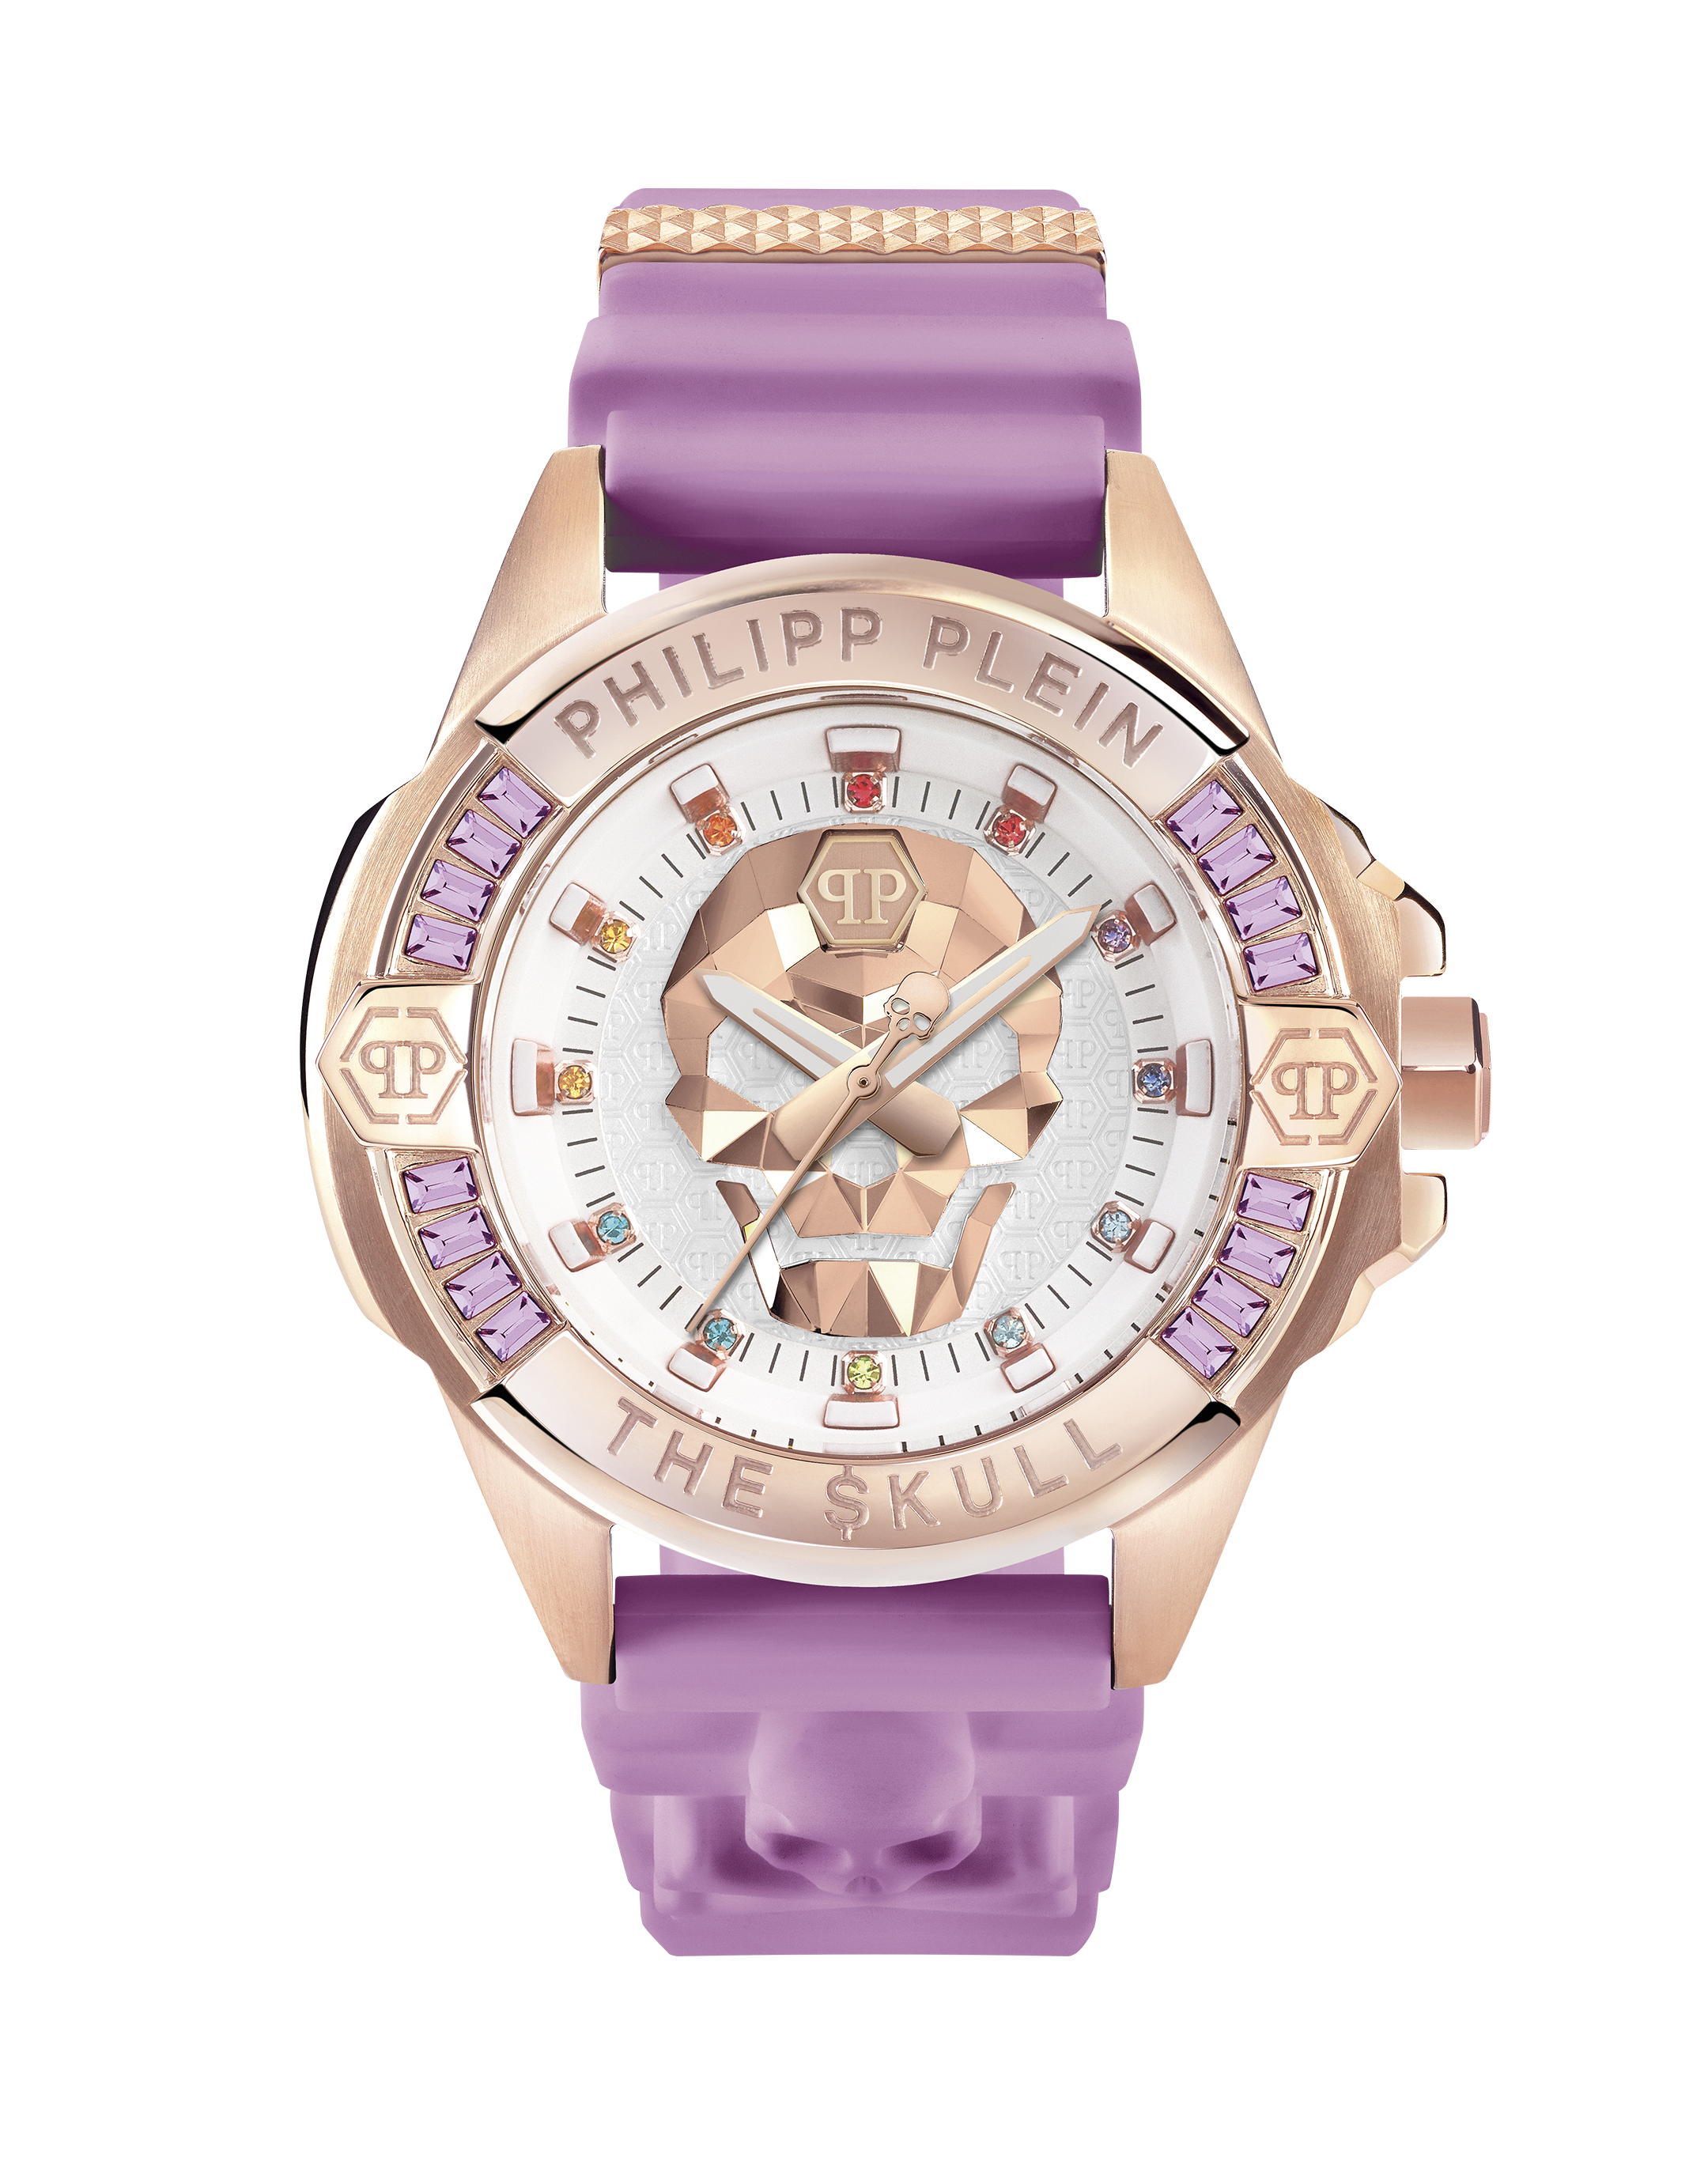 G-Shock Male Purple Analog-Digital Resin Watch G1435 – Just In Time